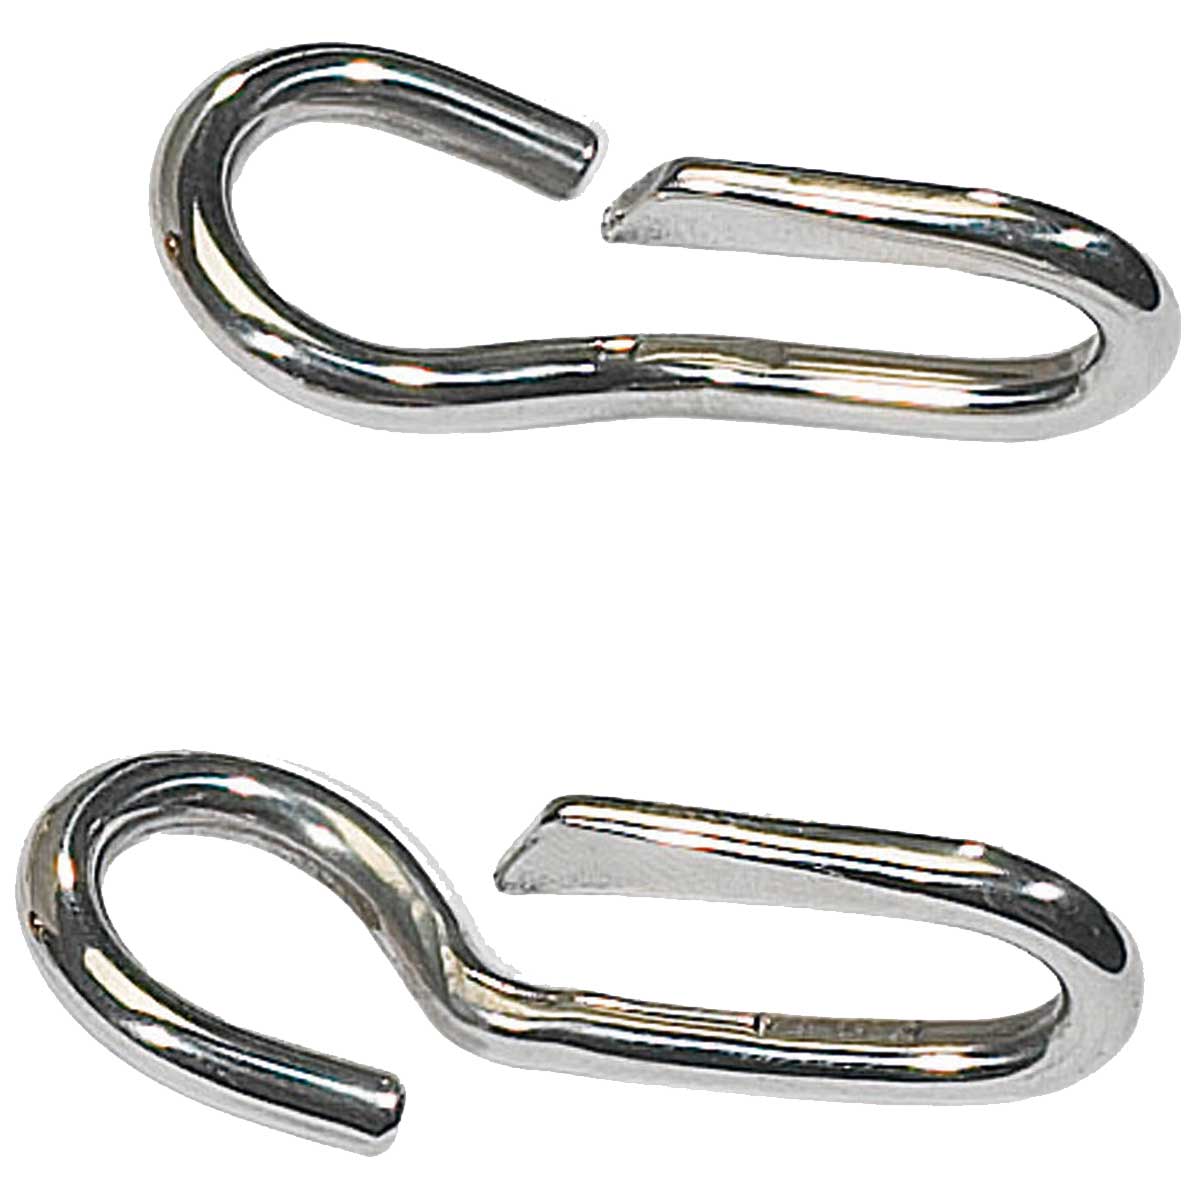 BUSSE cârlig pentru lanț de dresaj din oțel inoxidabil